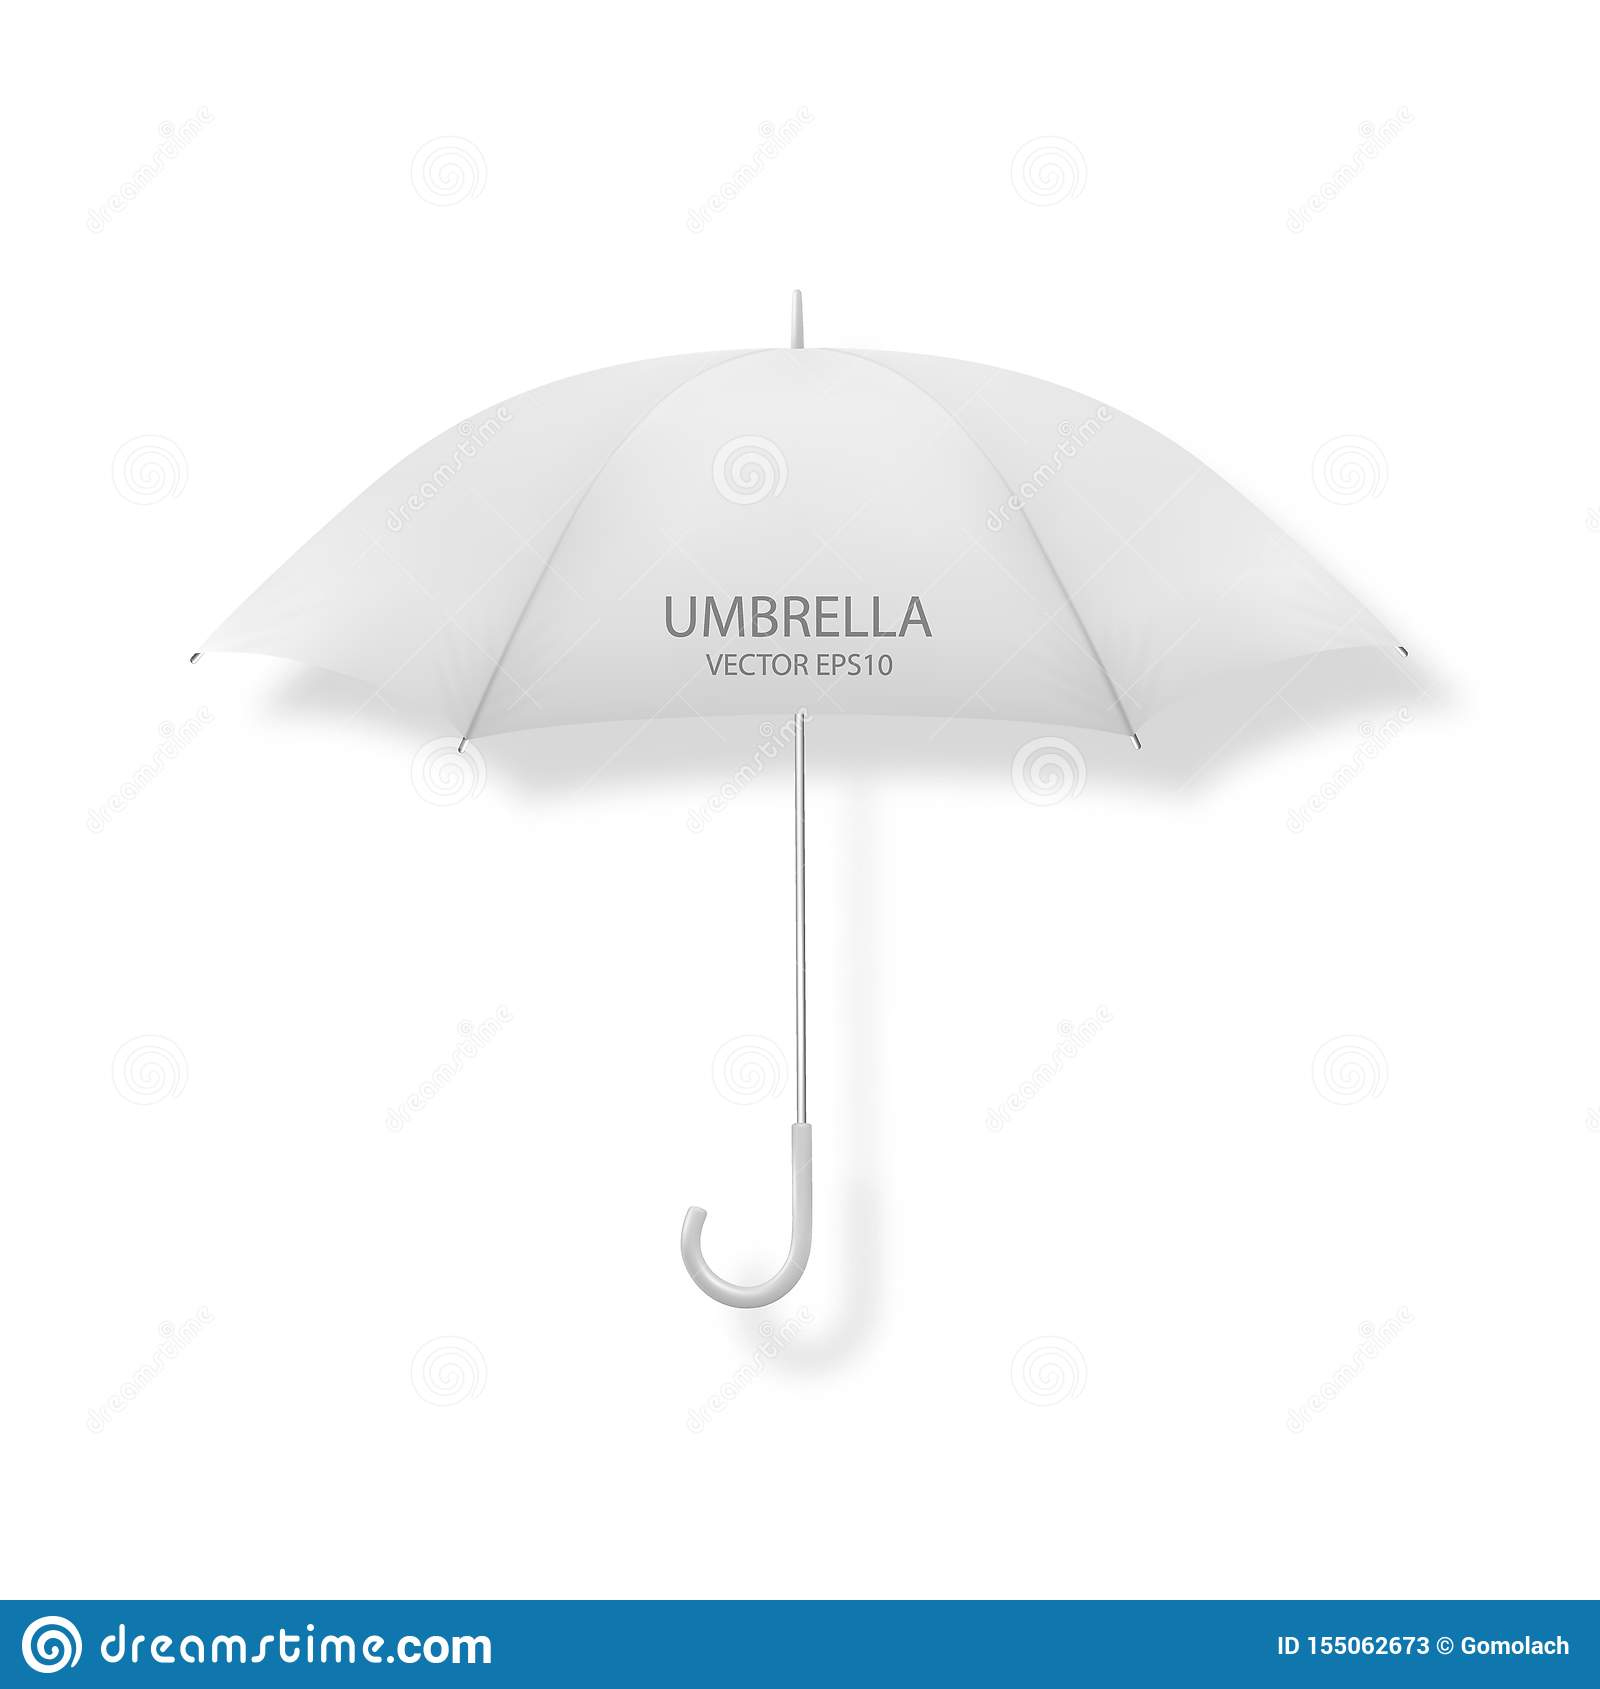 Vector 3D Realistic Render White Blank Umbrella Icon with regard to Blank Umbrella Template